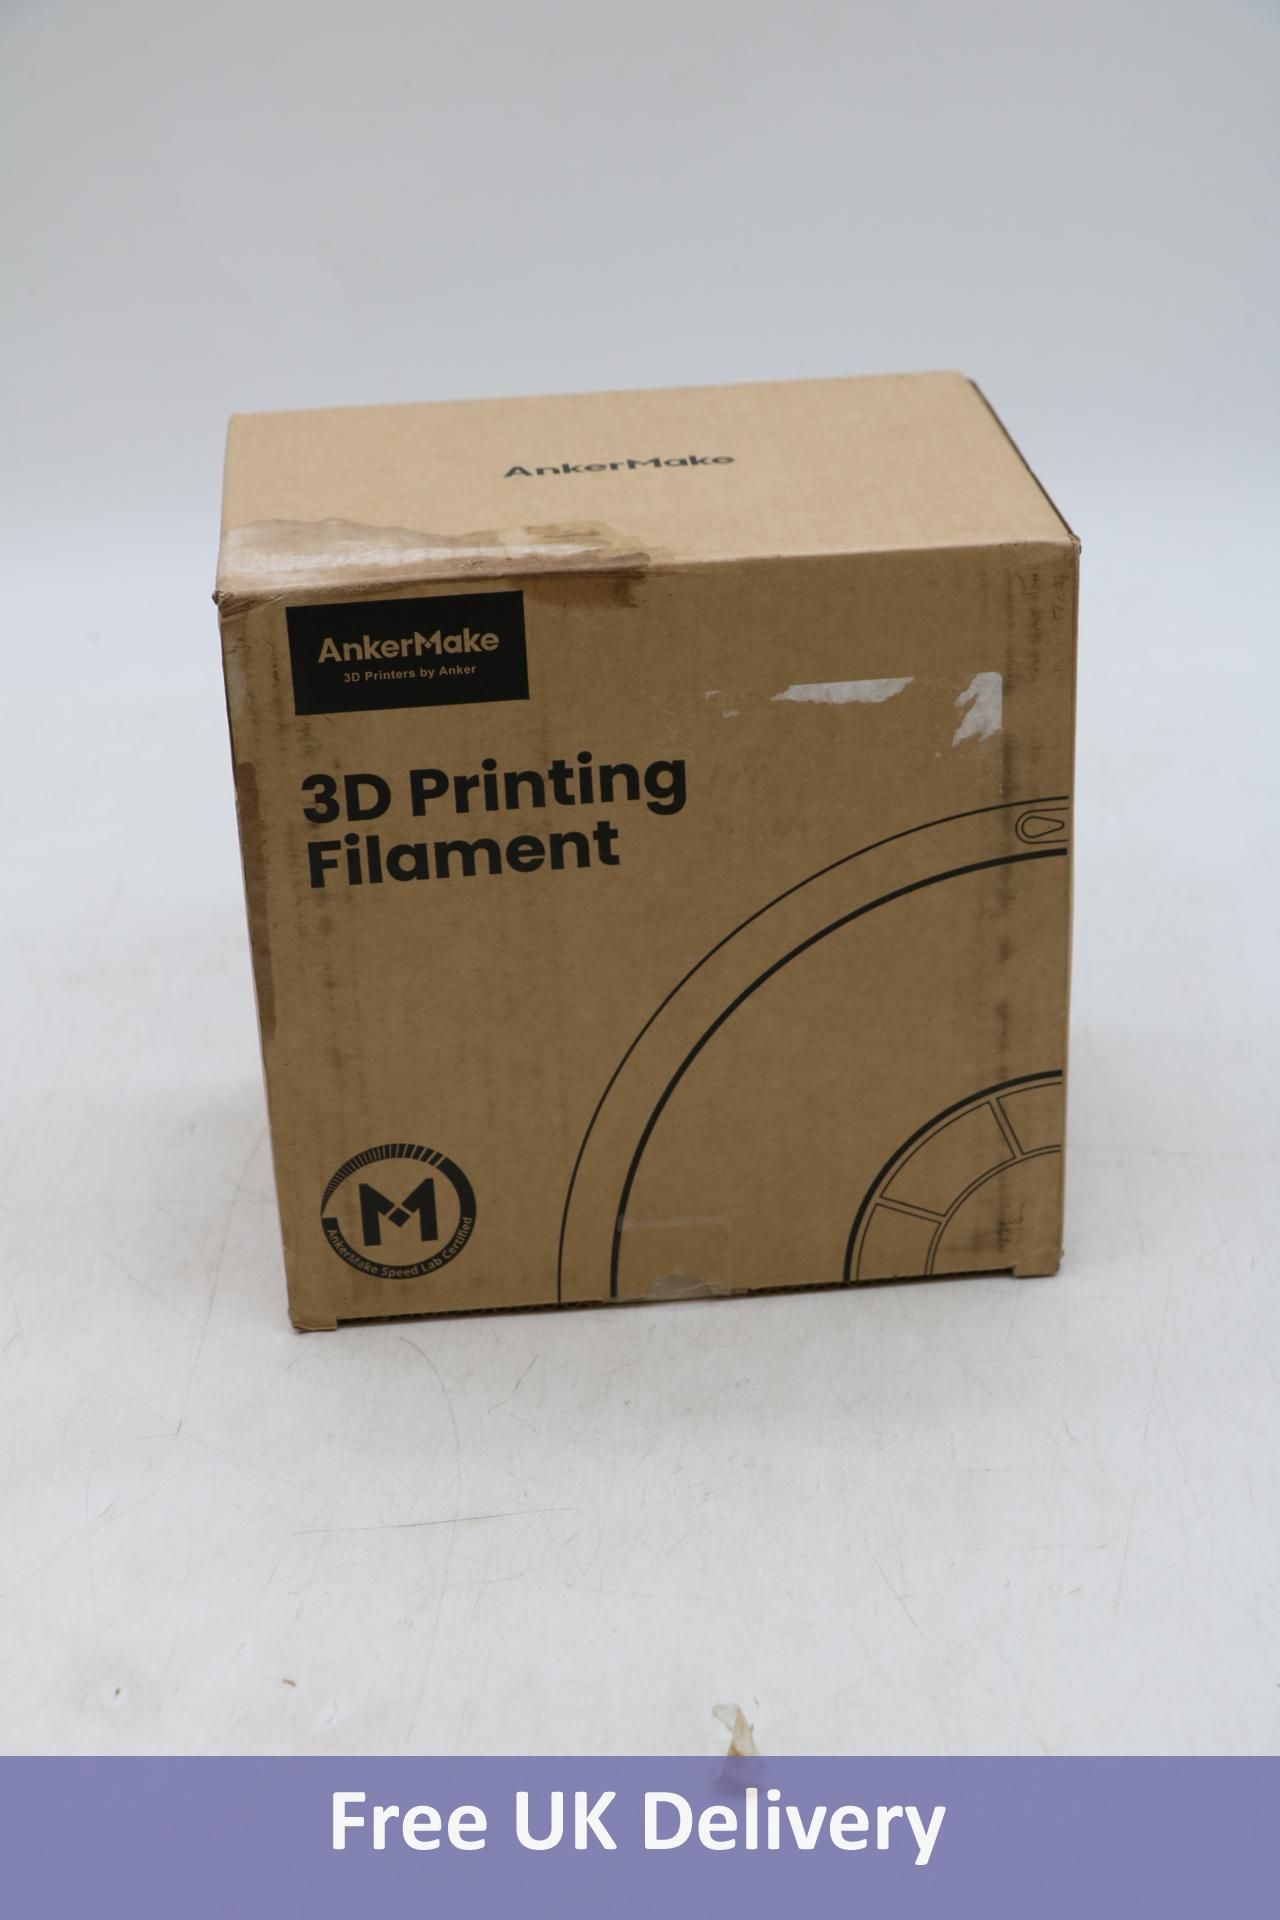 AnkerMake PLA+ Filament 2-Pack, Black. Box damaged